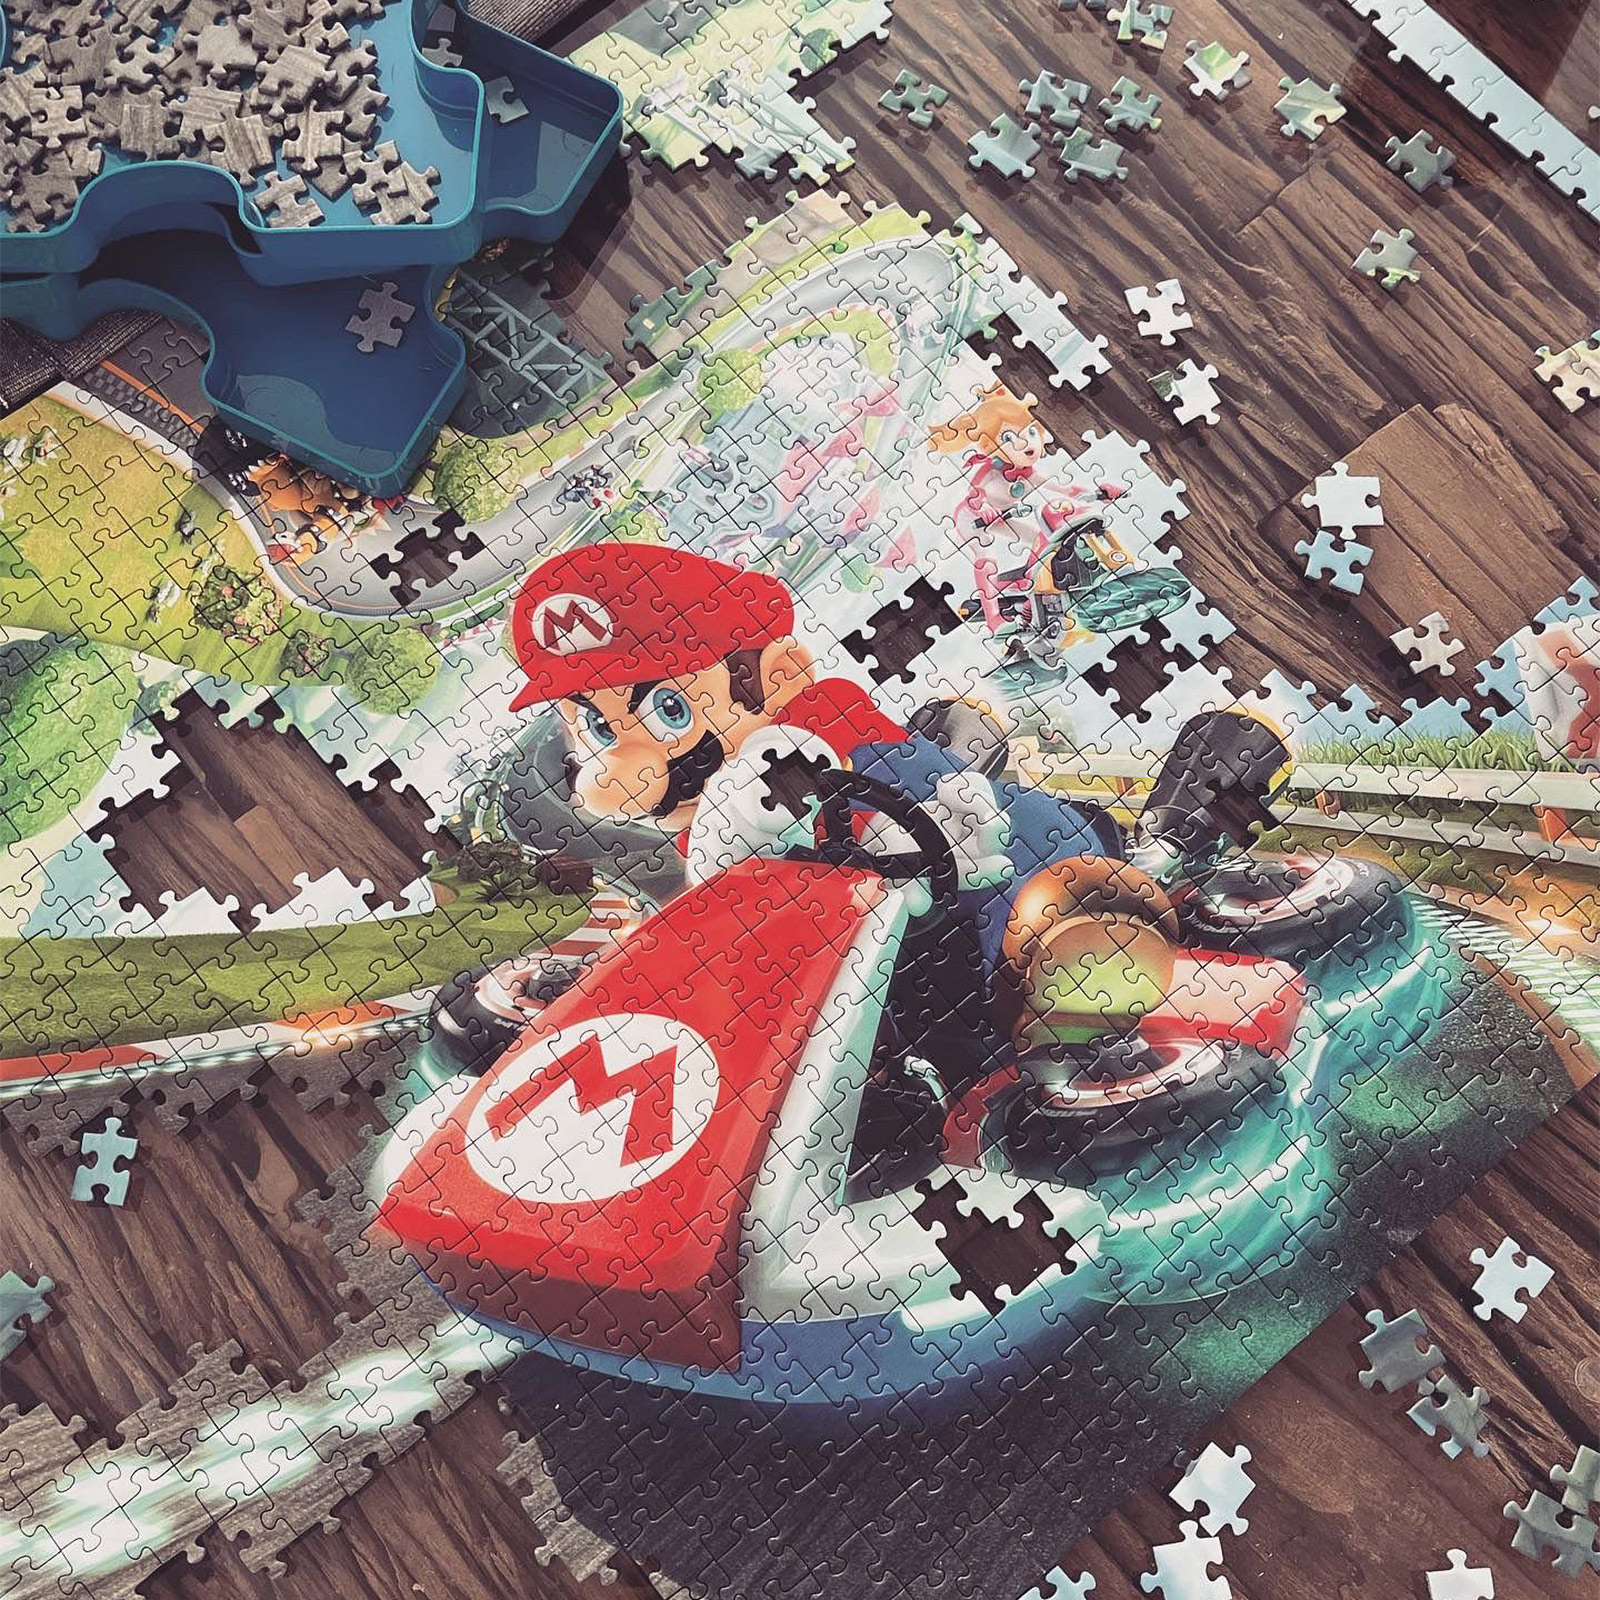 Super Mario - Mario Kart Funracer Puzzel